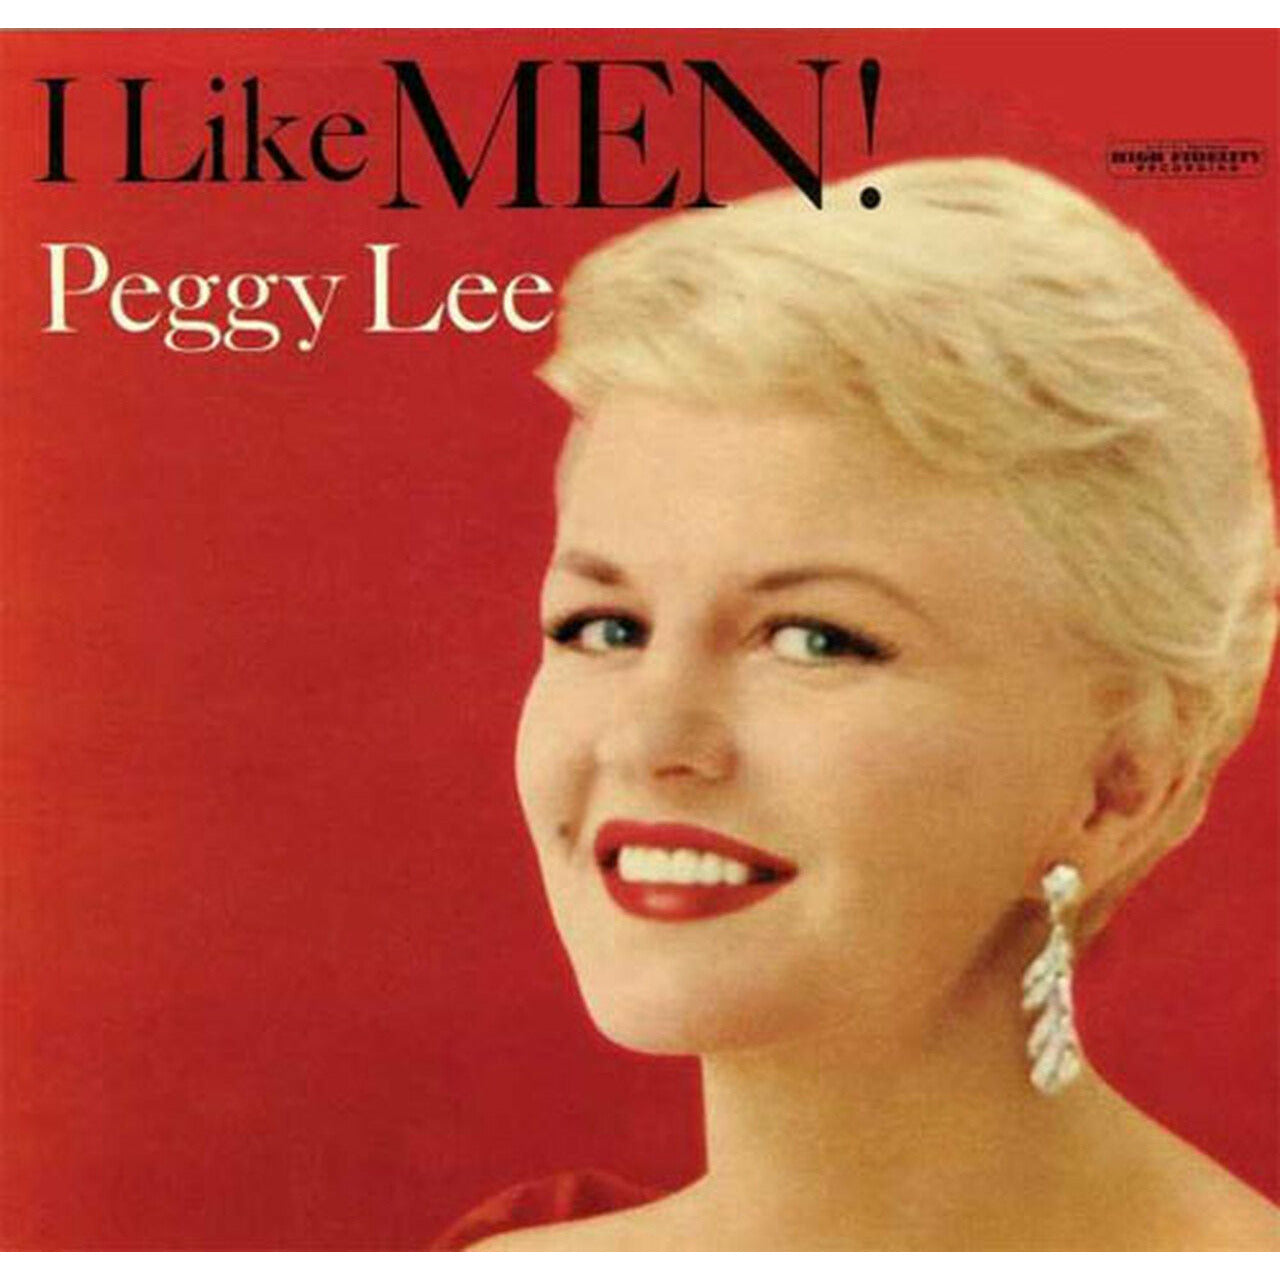 Peggy Lee - I Like Men! - Pure Pleasure LP